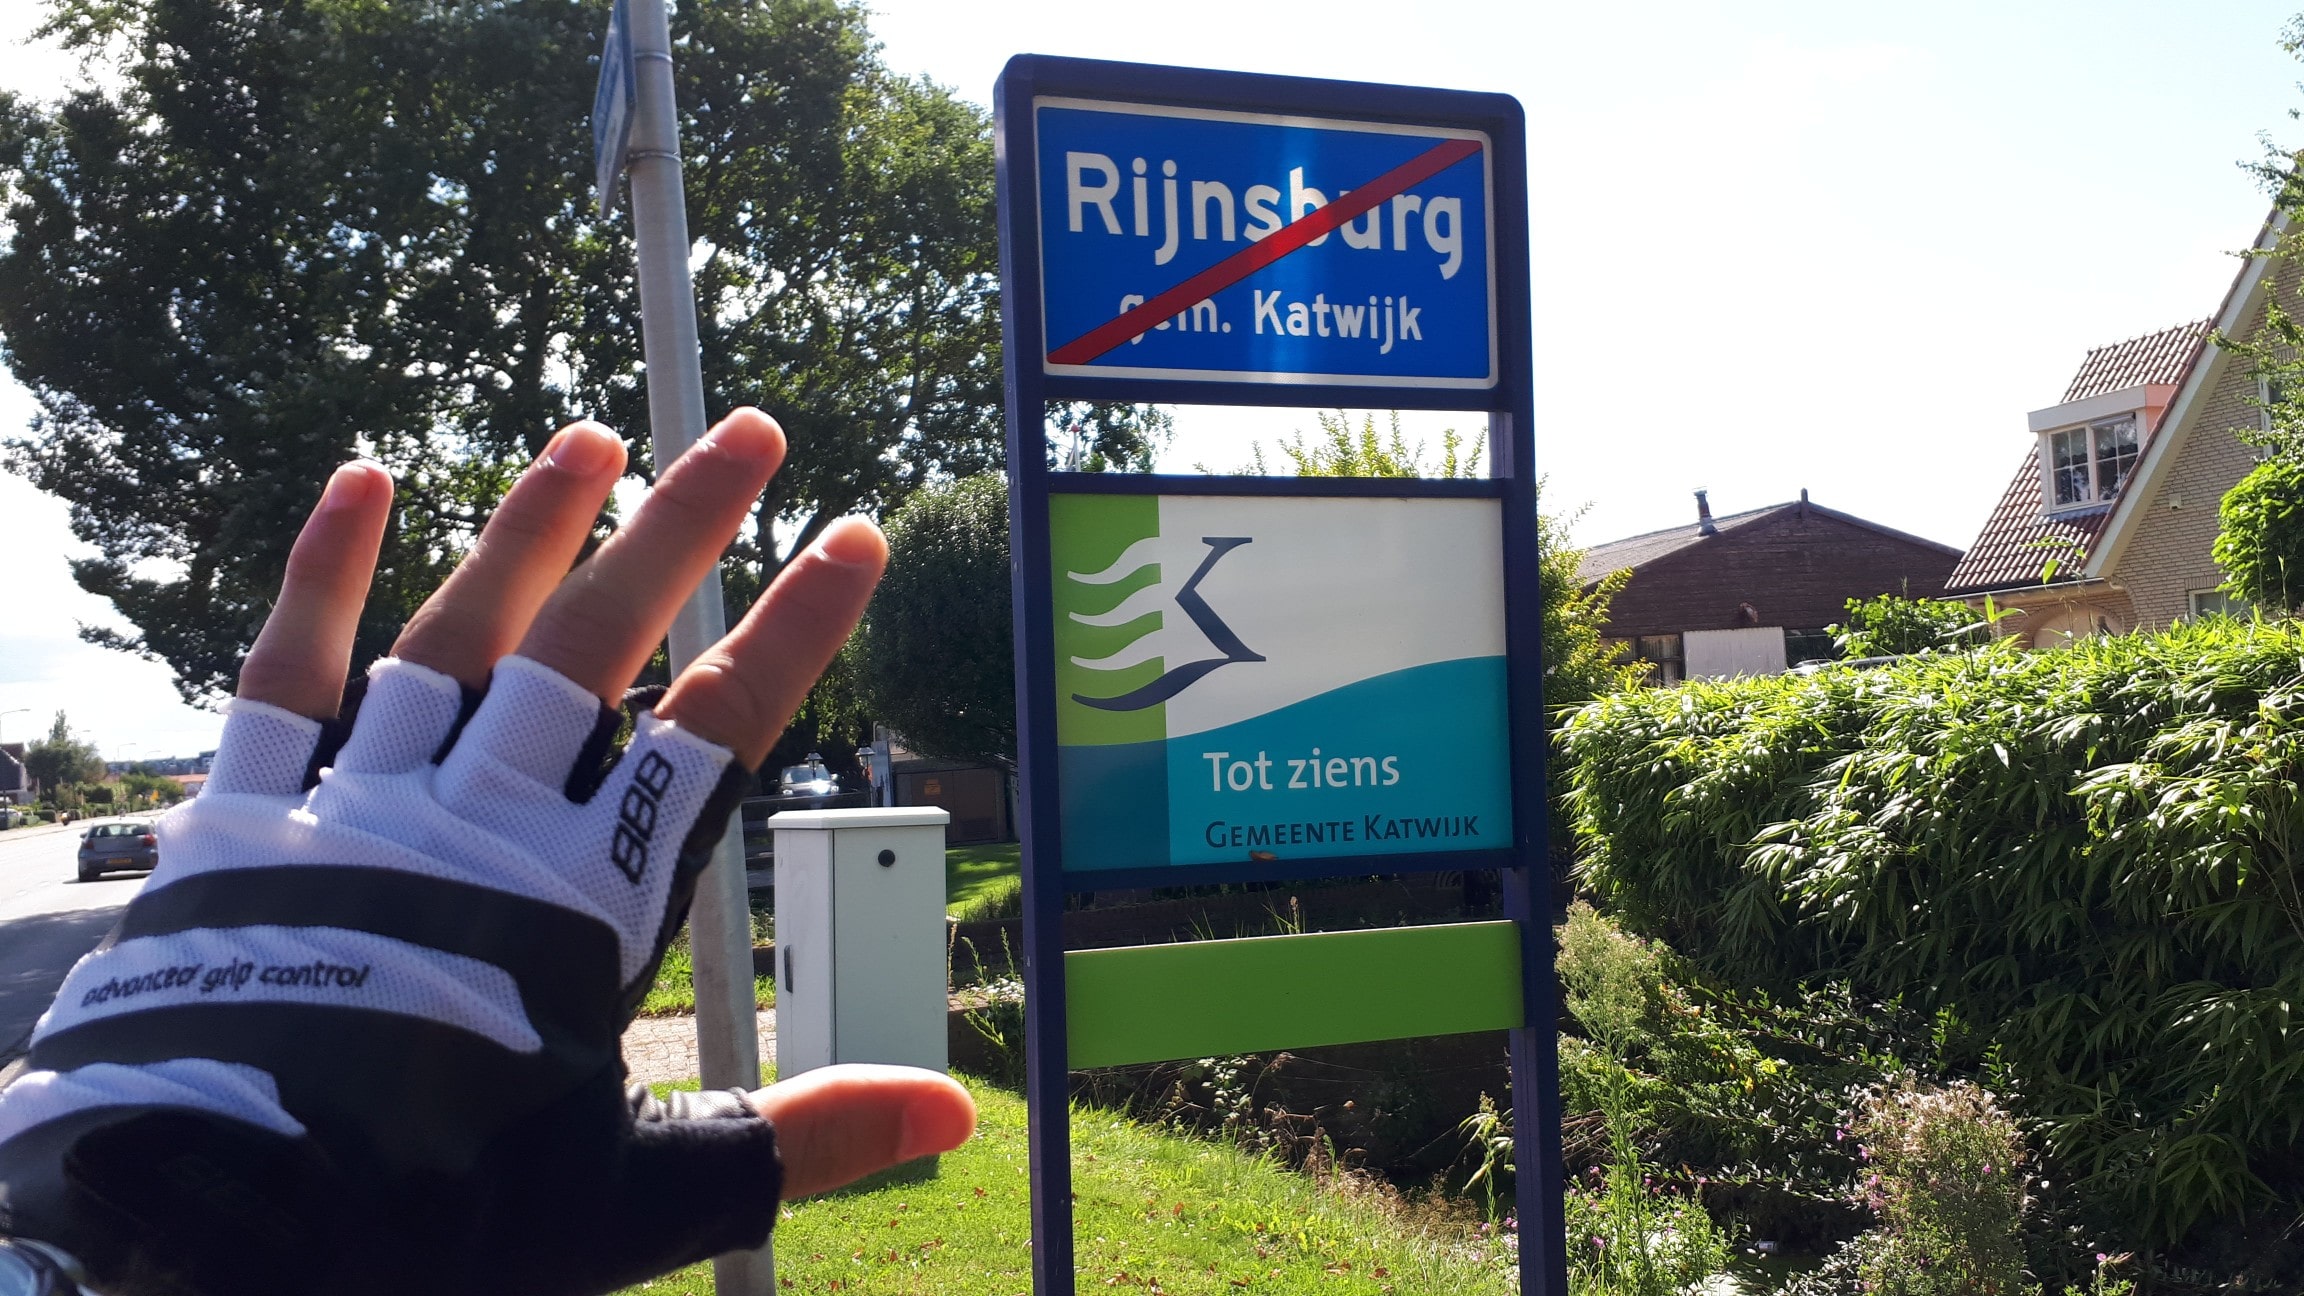 Waving my home town goodbye! See you later Rijnsburg!